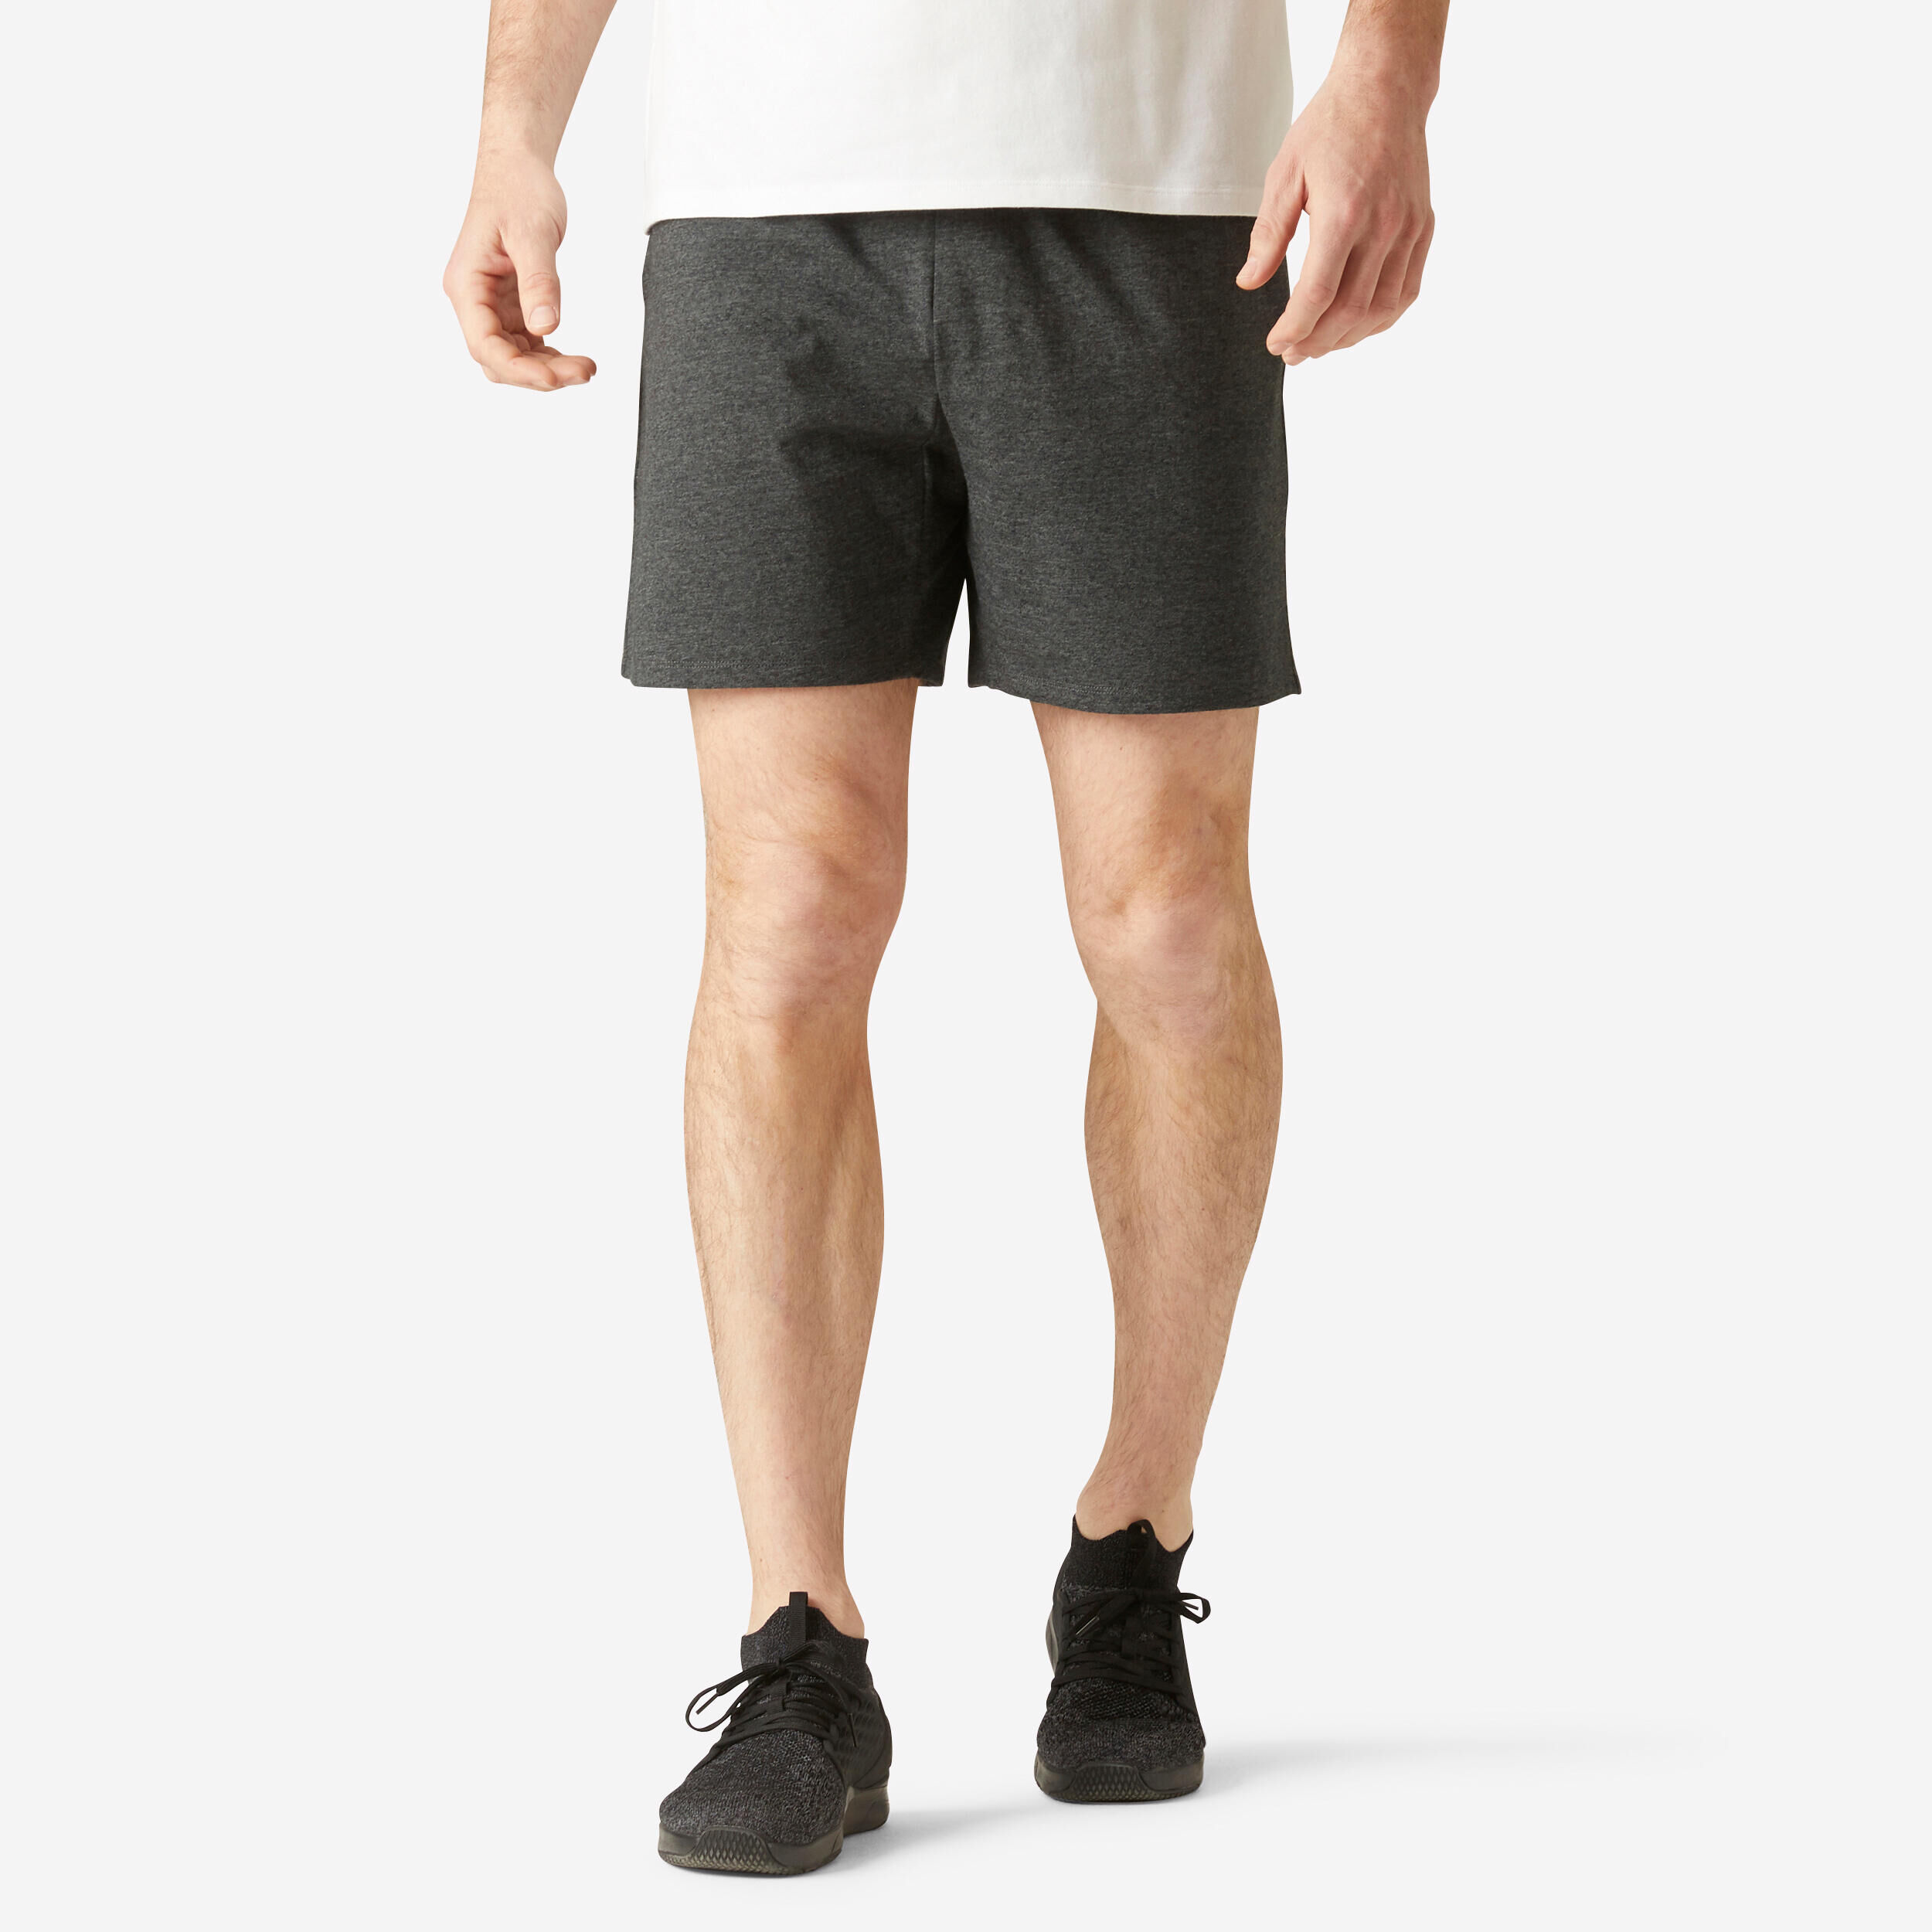 DOMYOS Men's Fitness Shorts 100 - Dark Grey